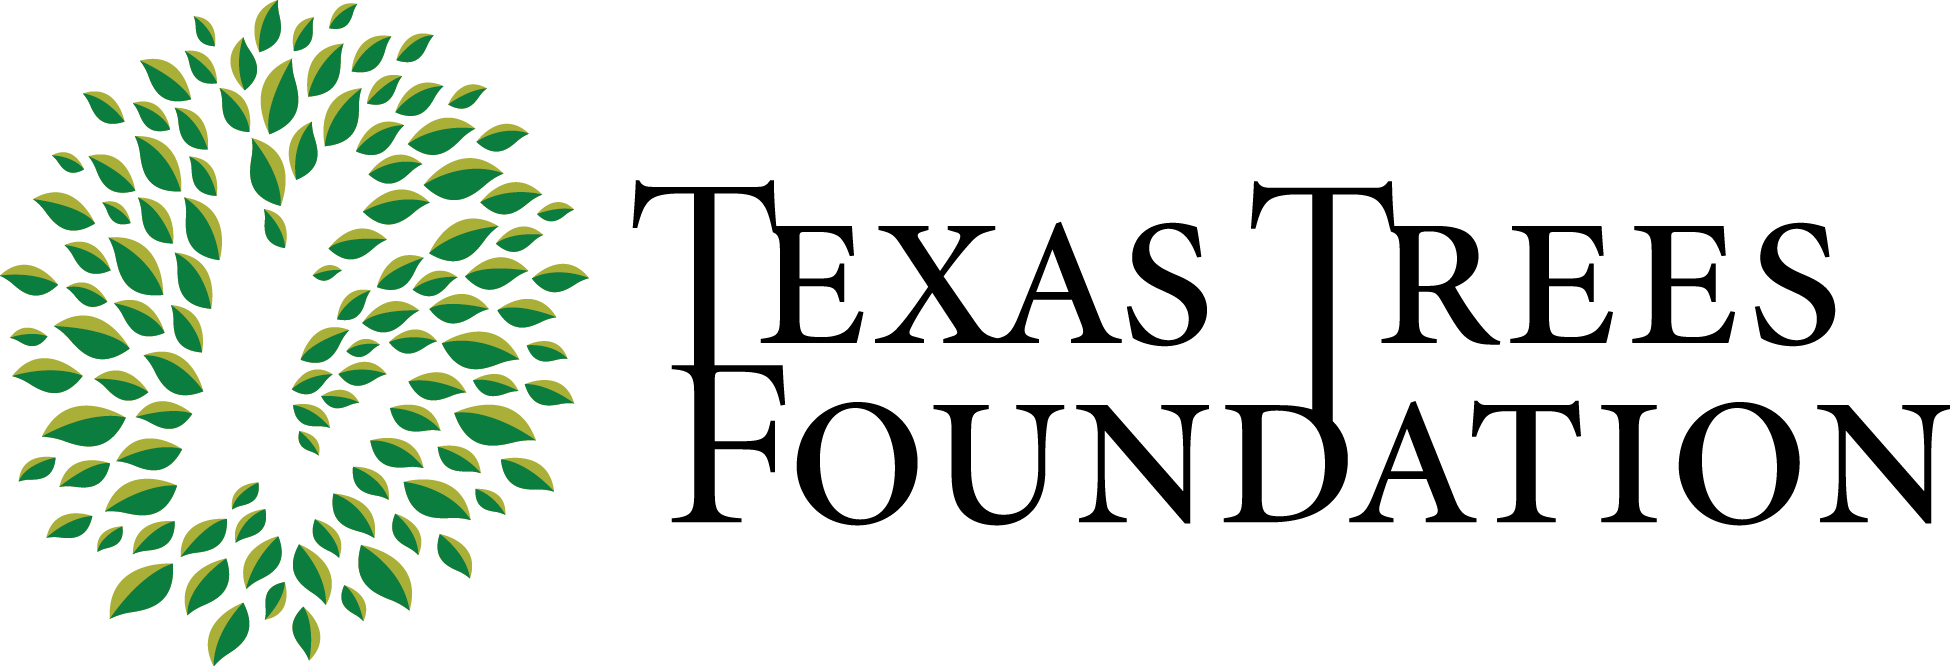 Texas trees foundation logo.